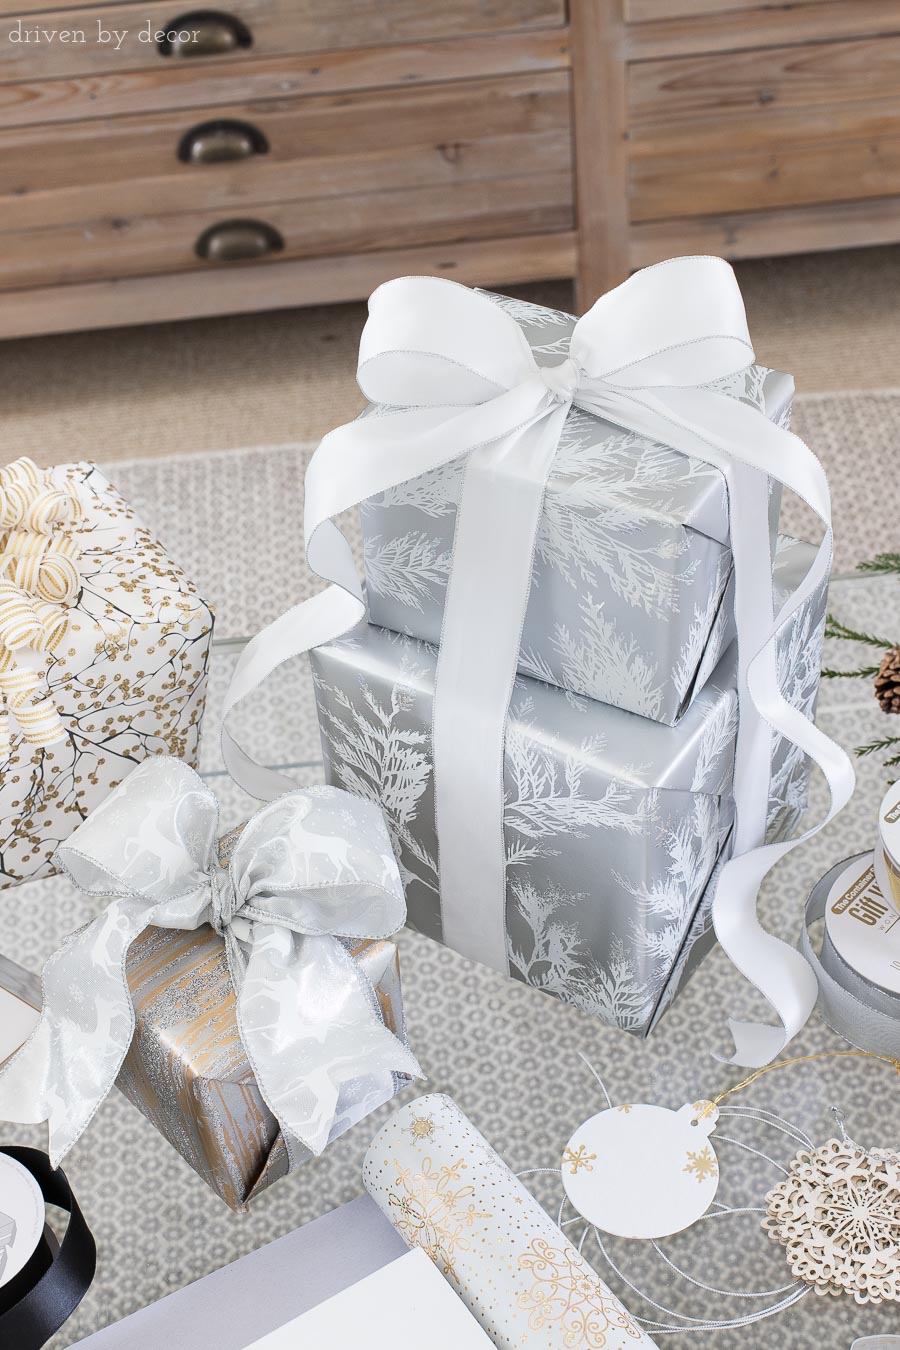 3 Elegant Ways to Wrap Wedding Gifts 